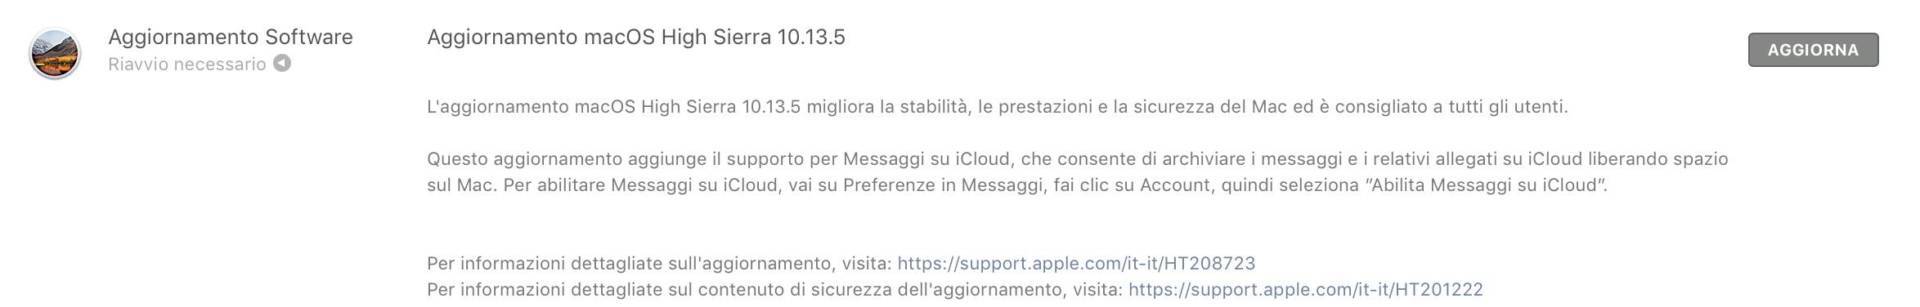 macOS 10.13.5 disponibile al download per Mac 1